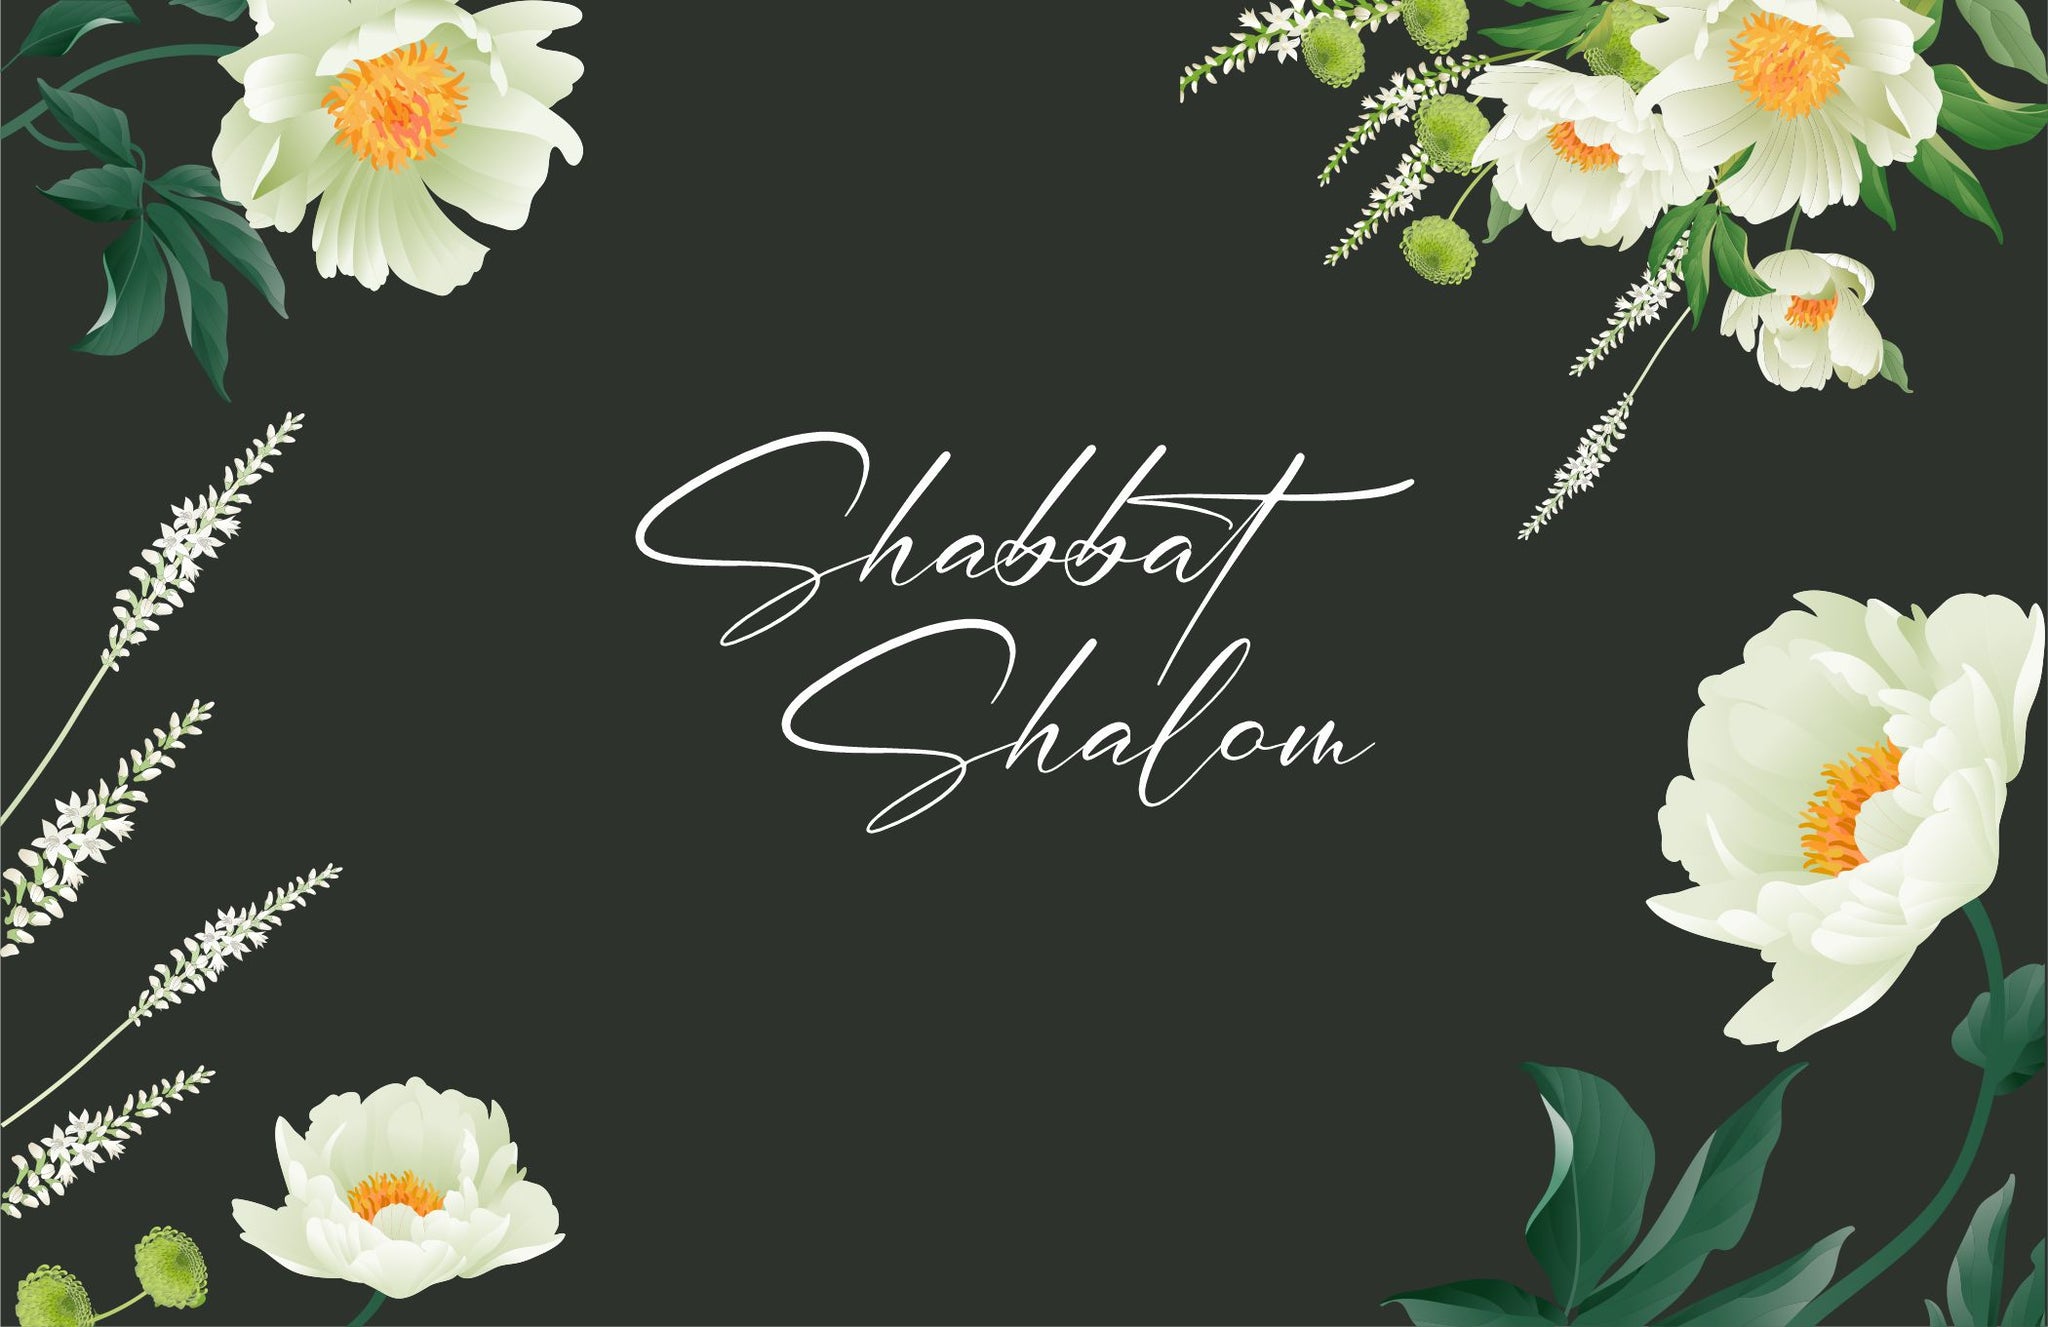 Shabbat Shalom black with white floral style